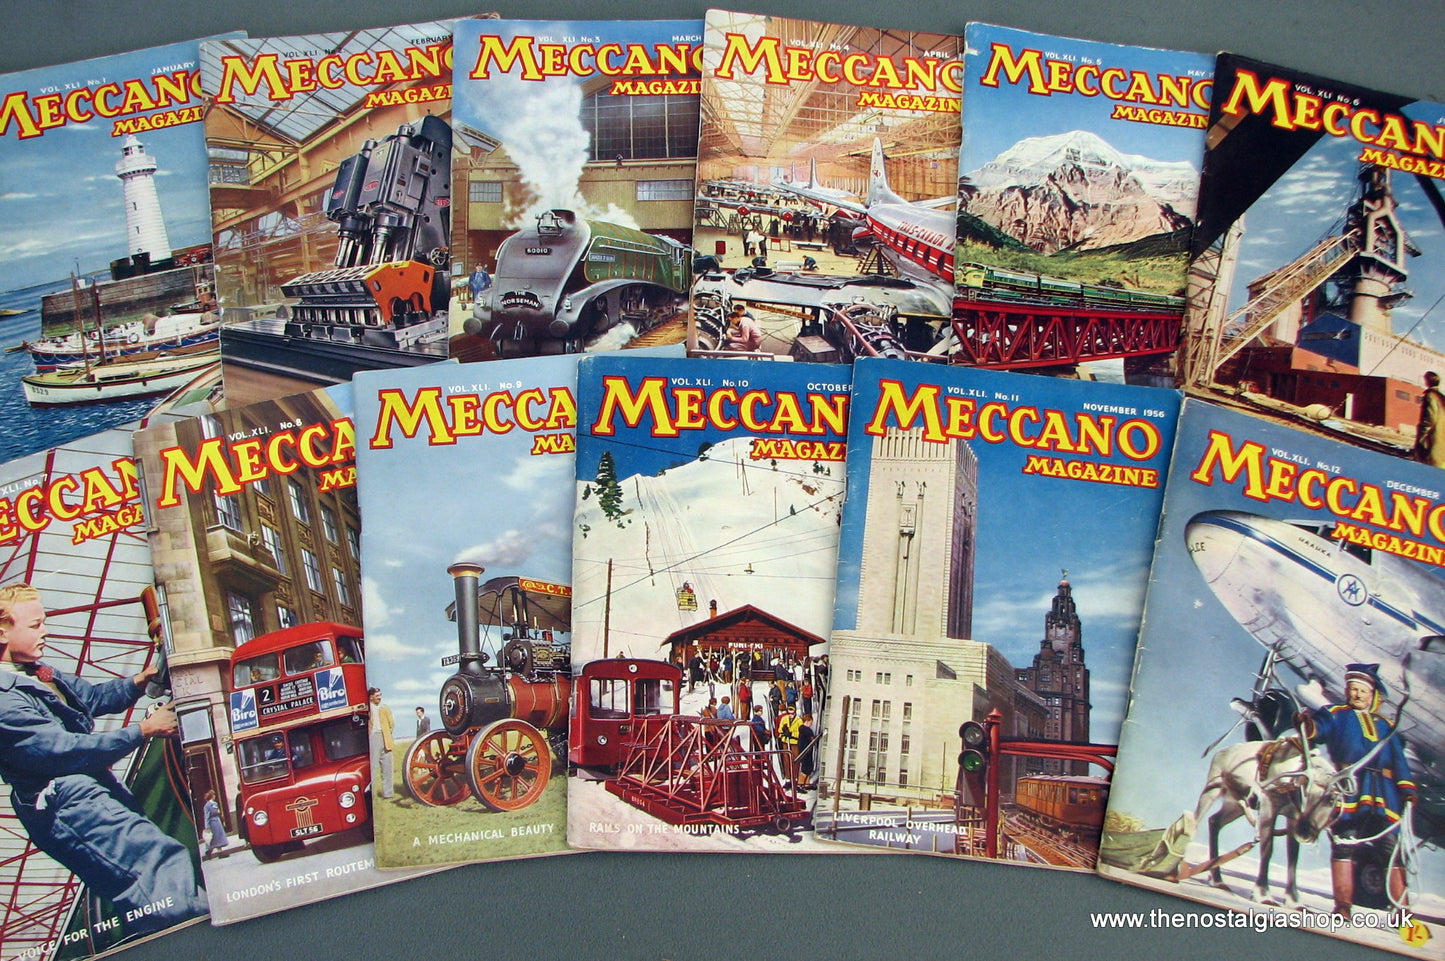 Meccano Magazines 1956. Full year 12 issues.